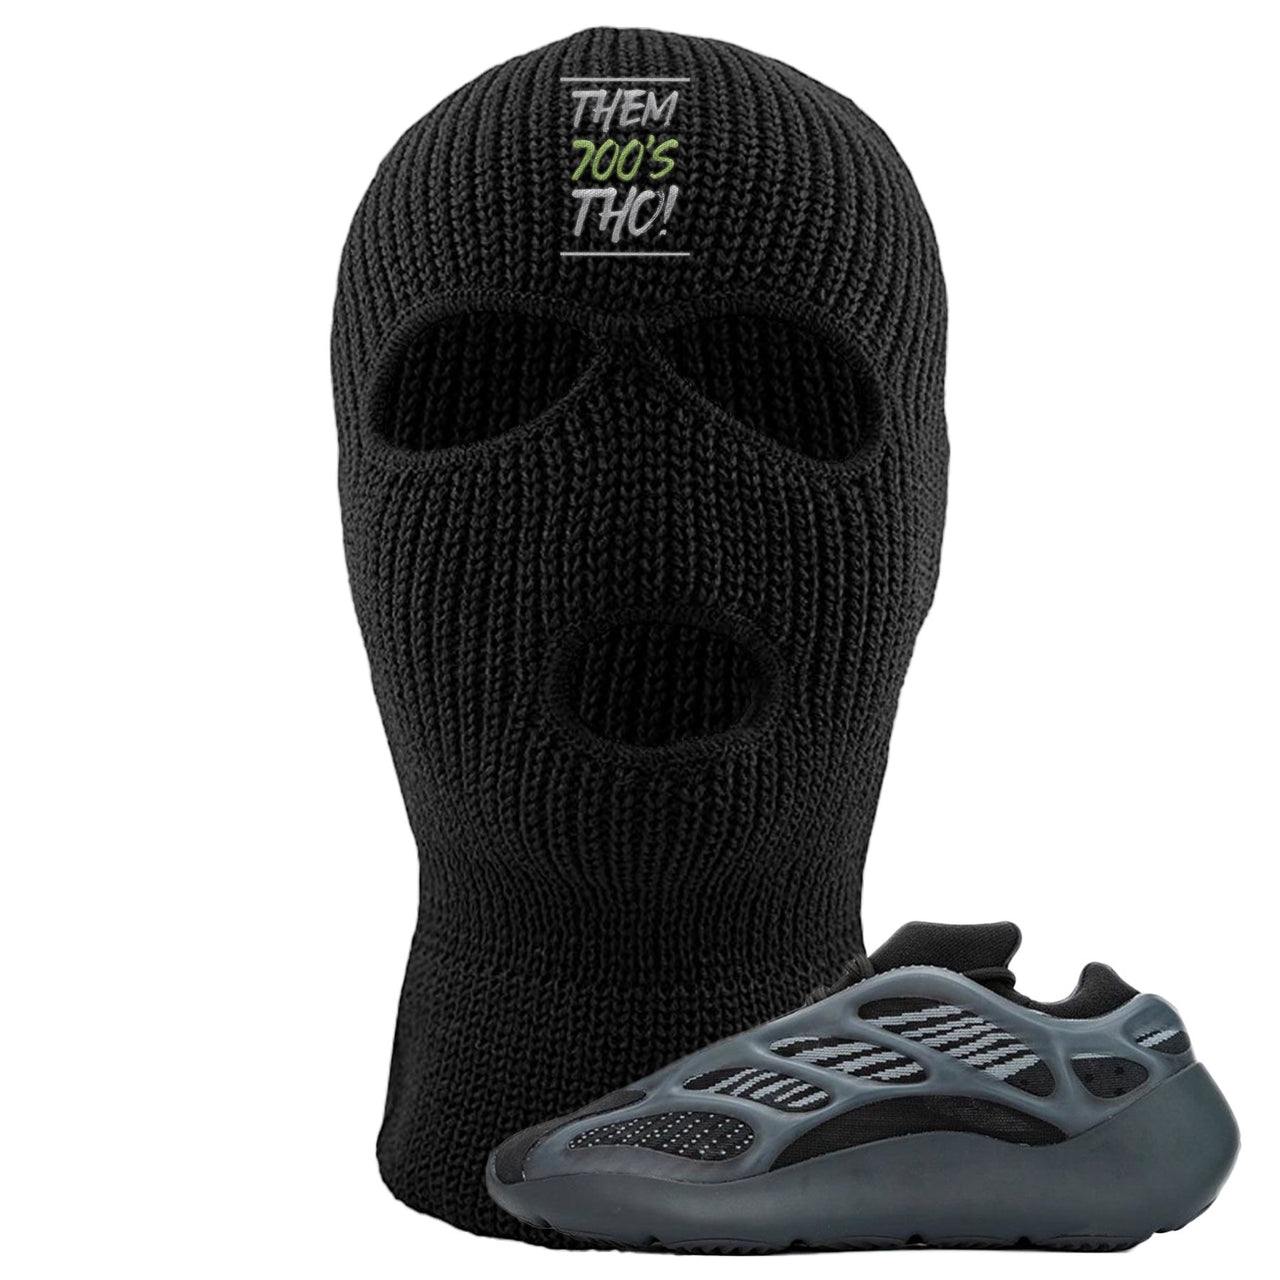 Alvah v3 700s Ski Mask | Them 700's Tho!, Black